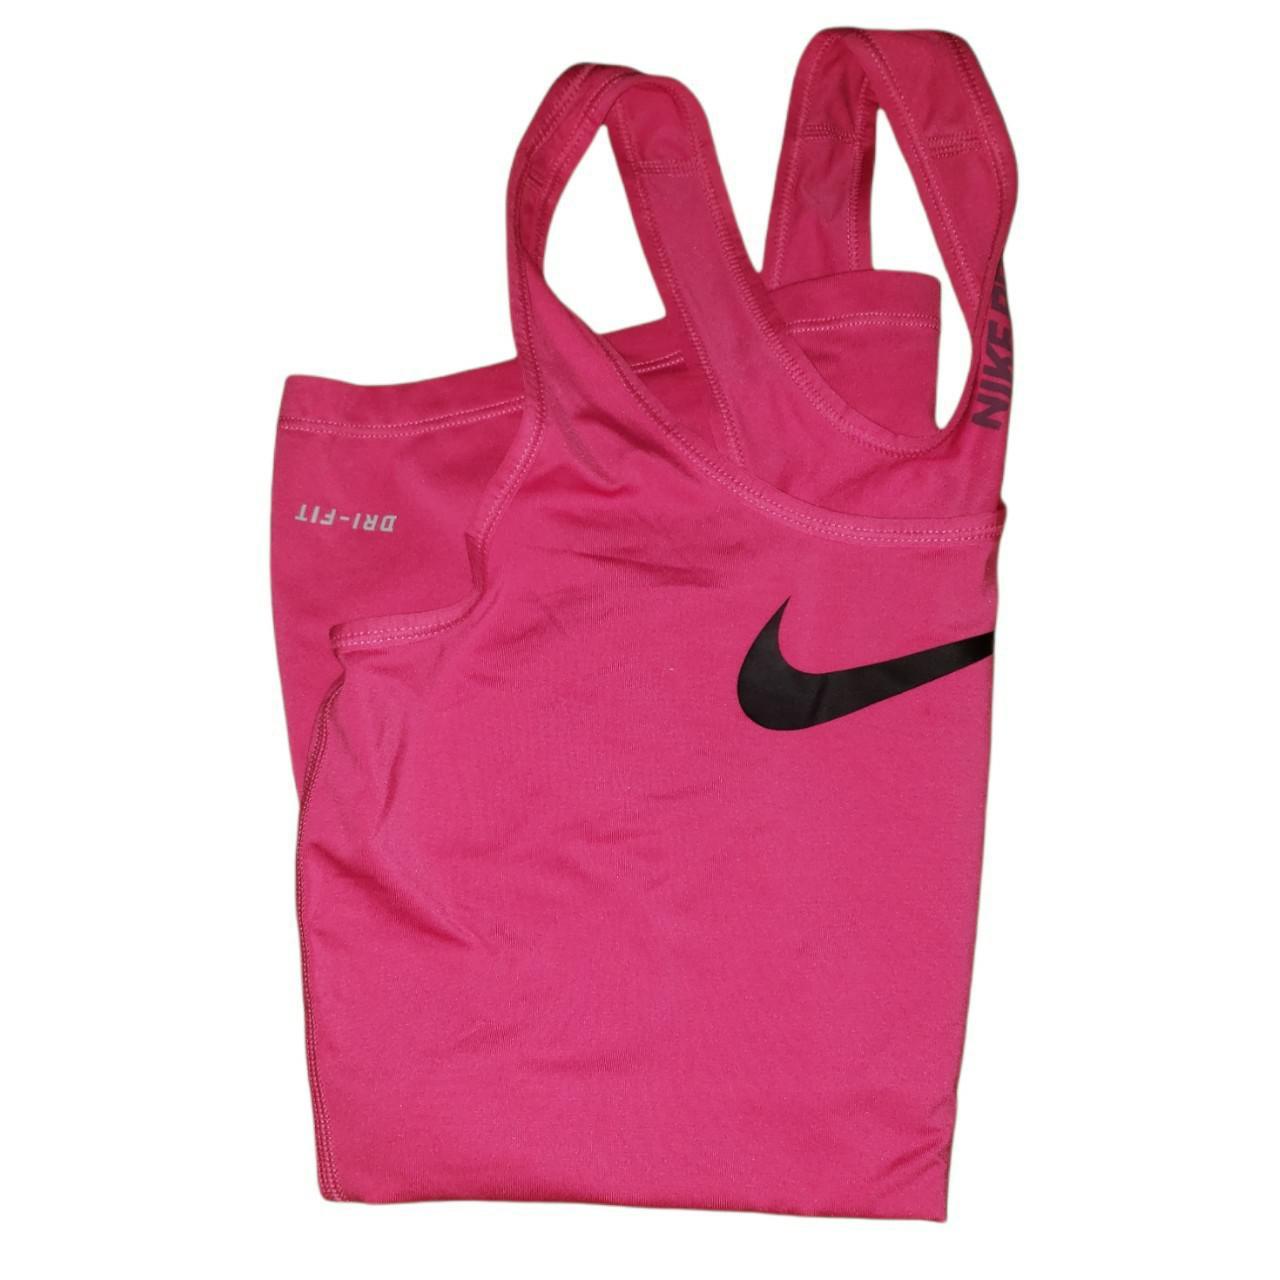 Nike Women's Pink Vests-tanks-camis (3)